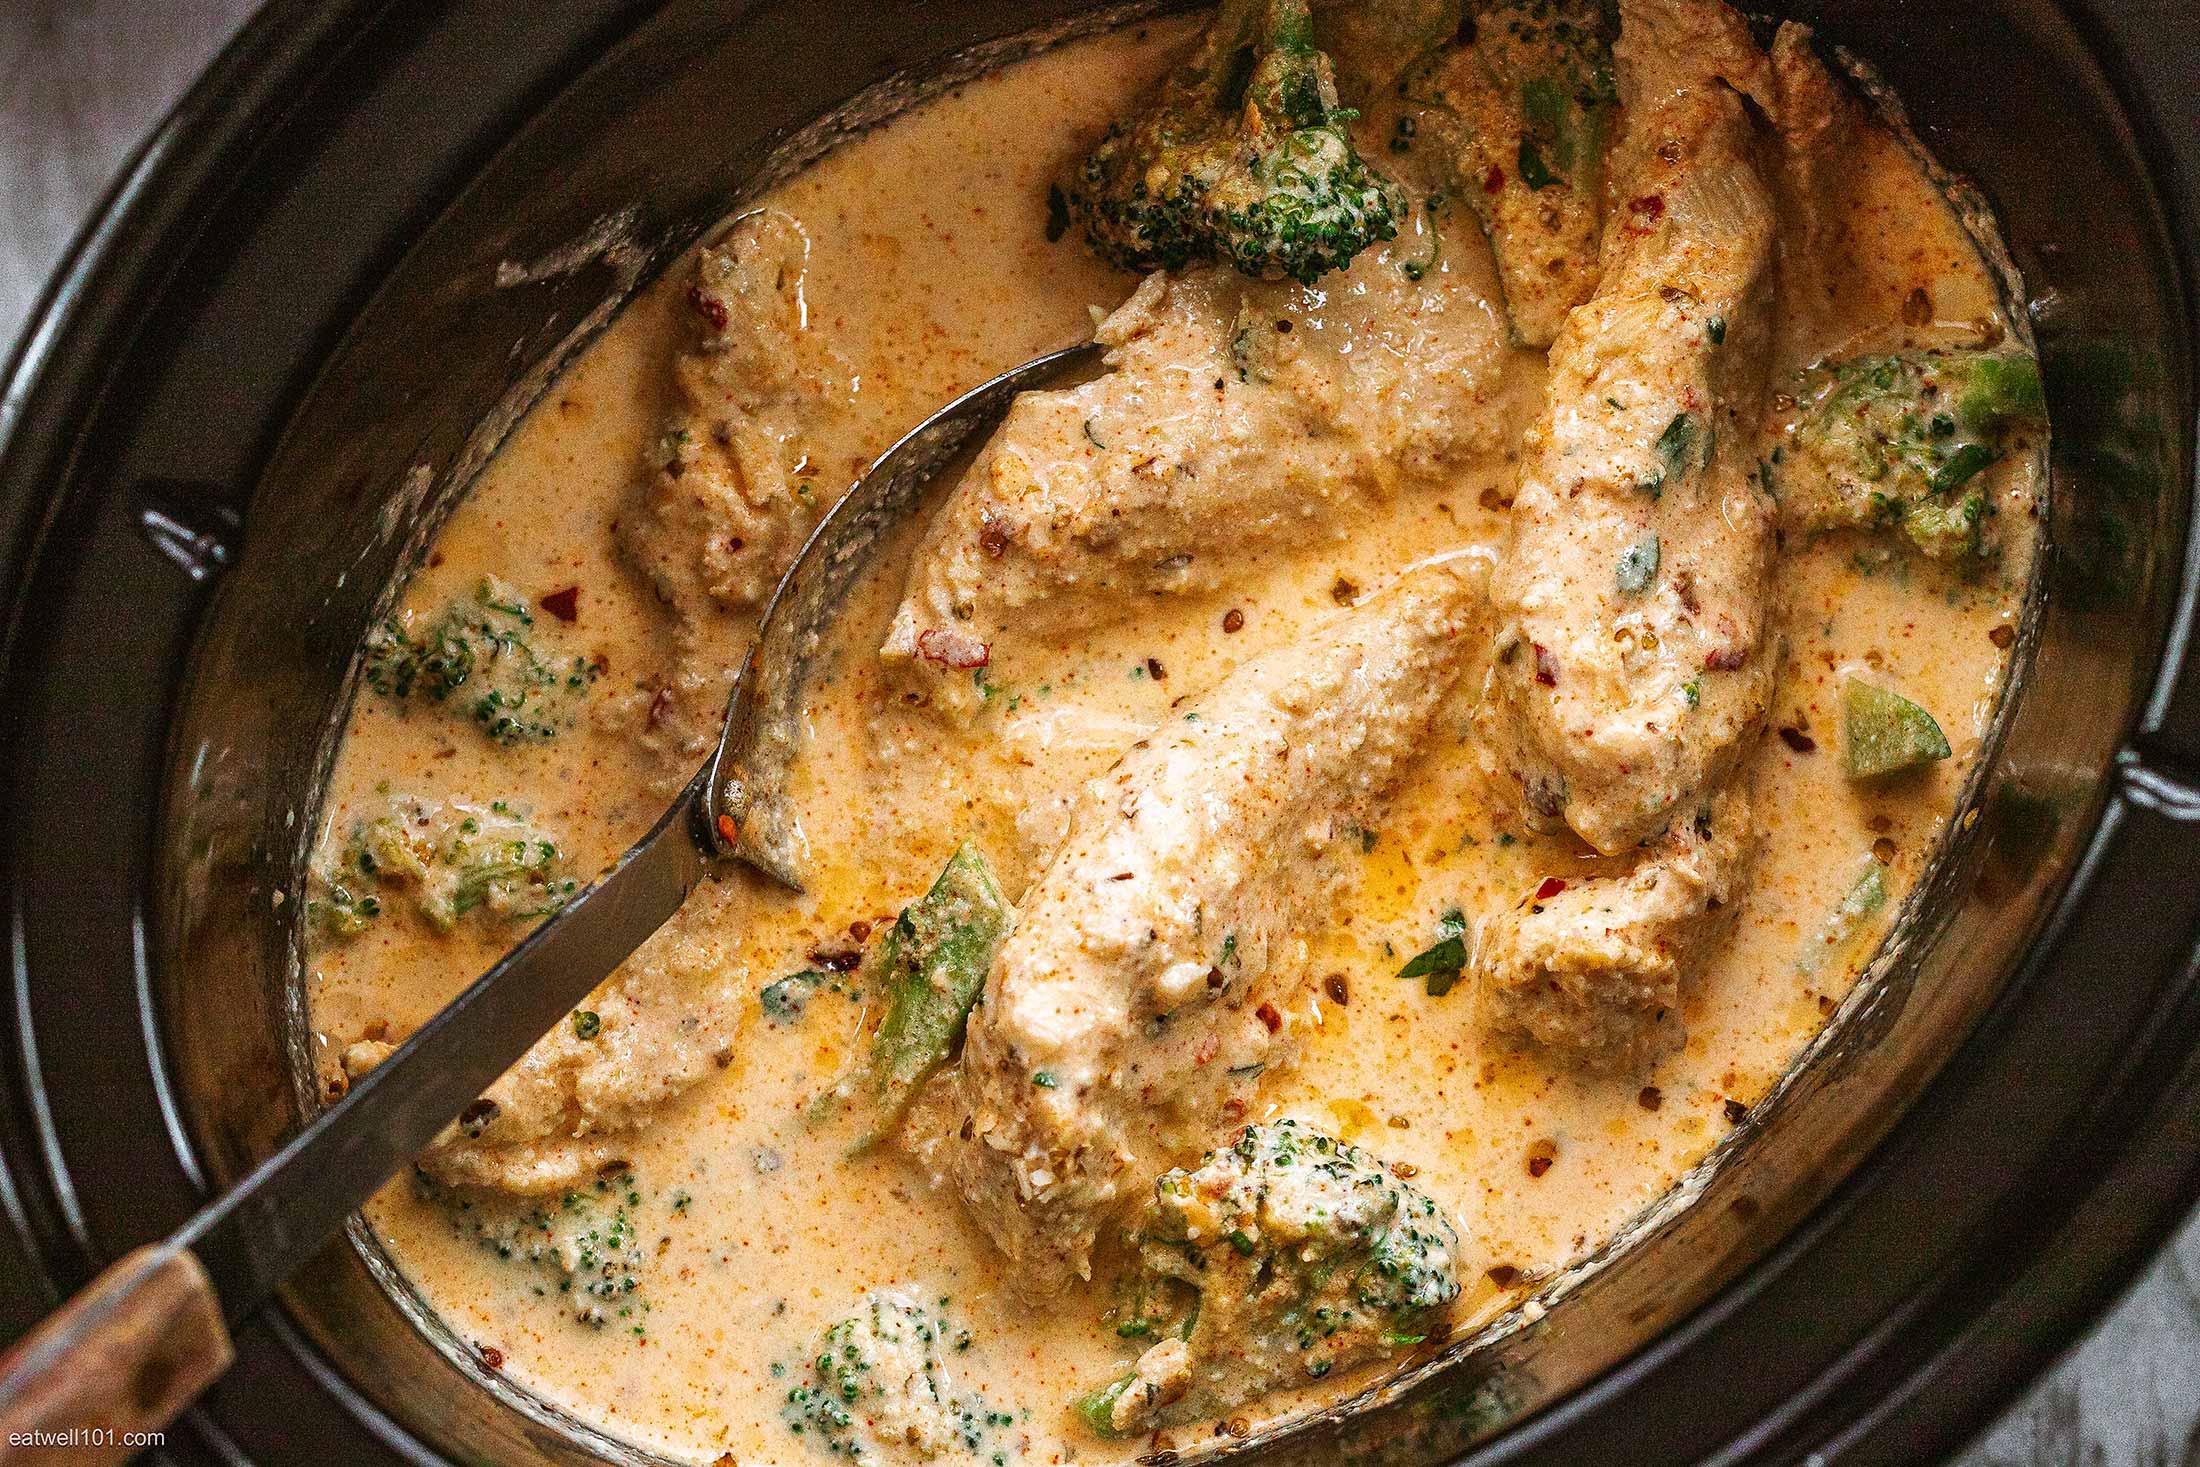 Crockpot Recipes: 27 Best Healthy Crockpot Recipes for Easy Dinner